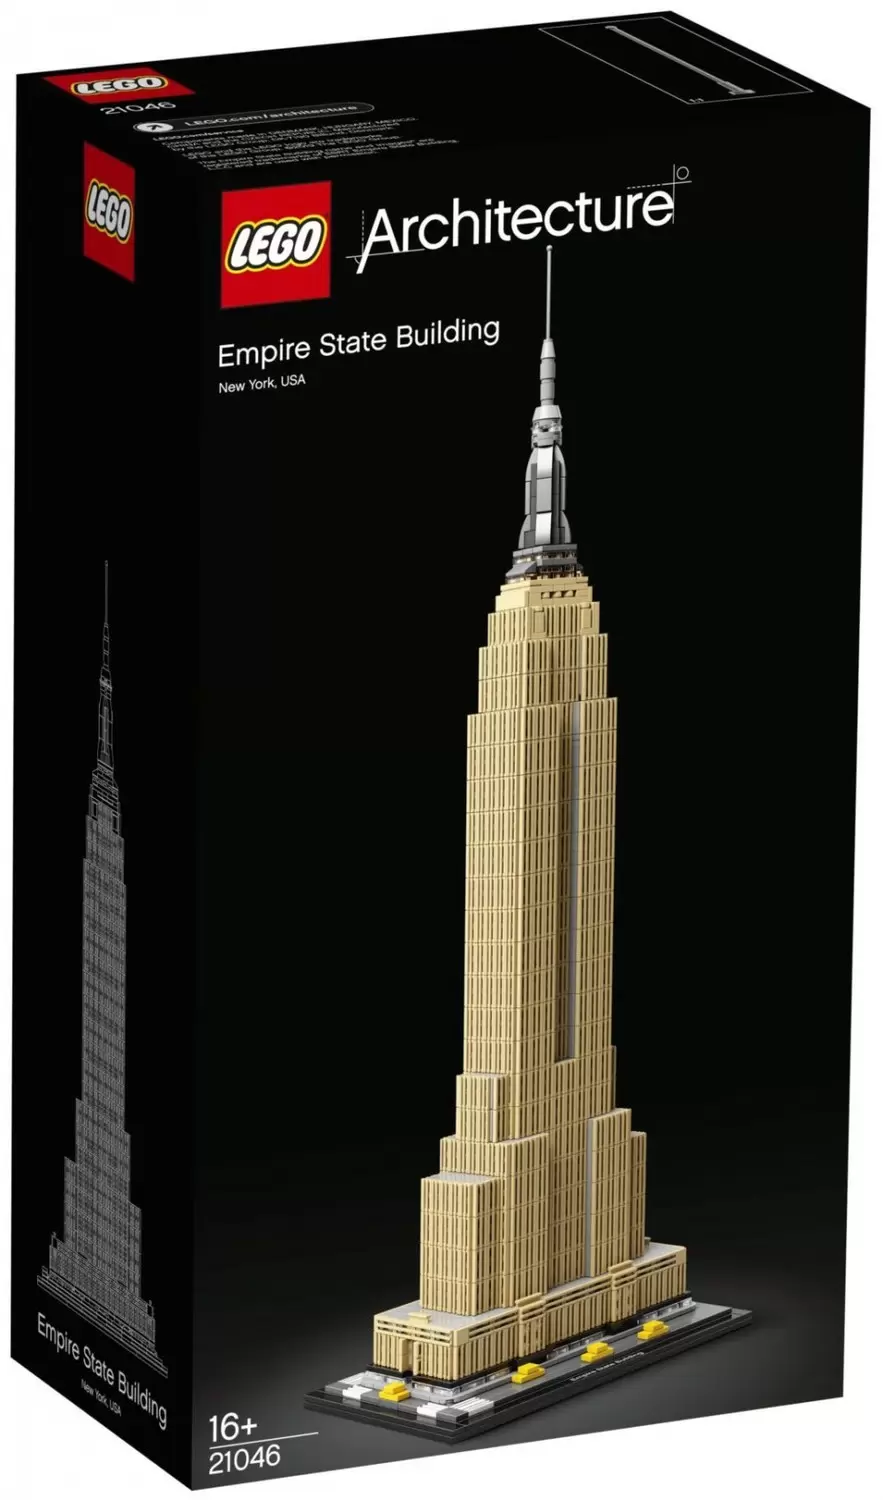 LEGO Architecture - Empire State Building, New York, USA